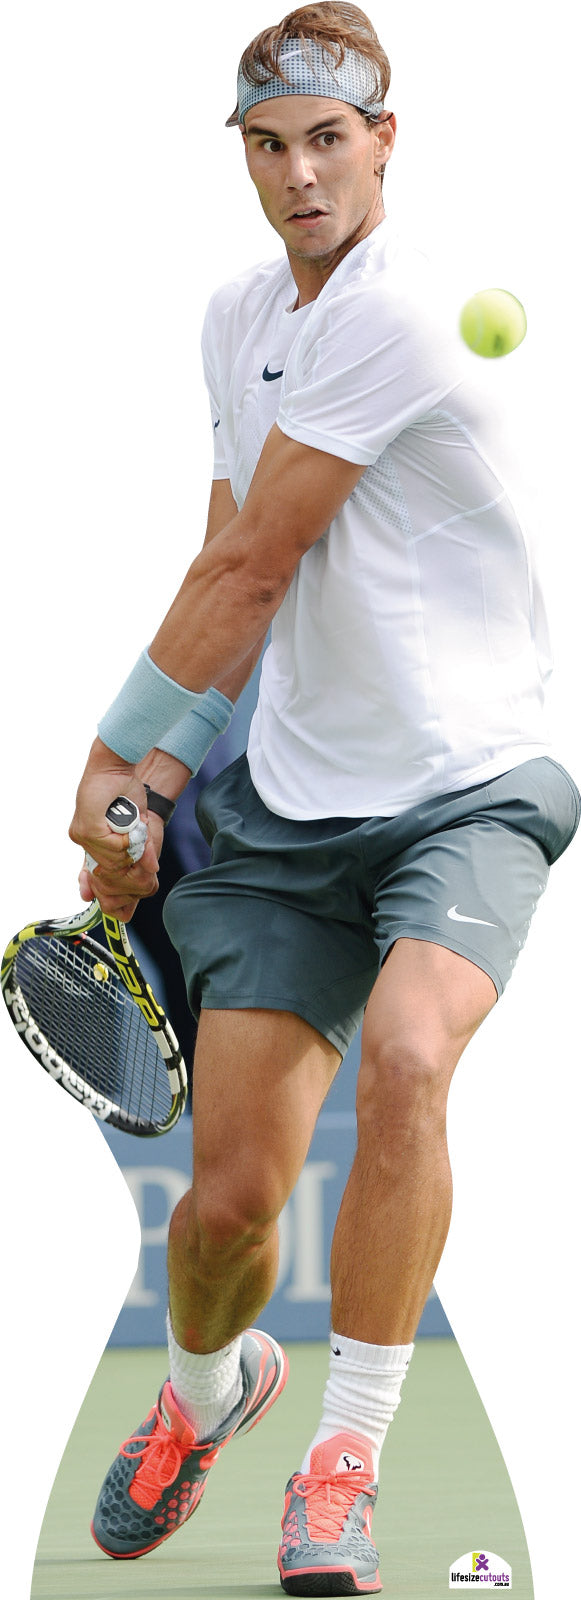 Rafa Nadal - Tennis Player